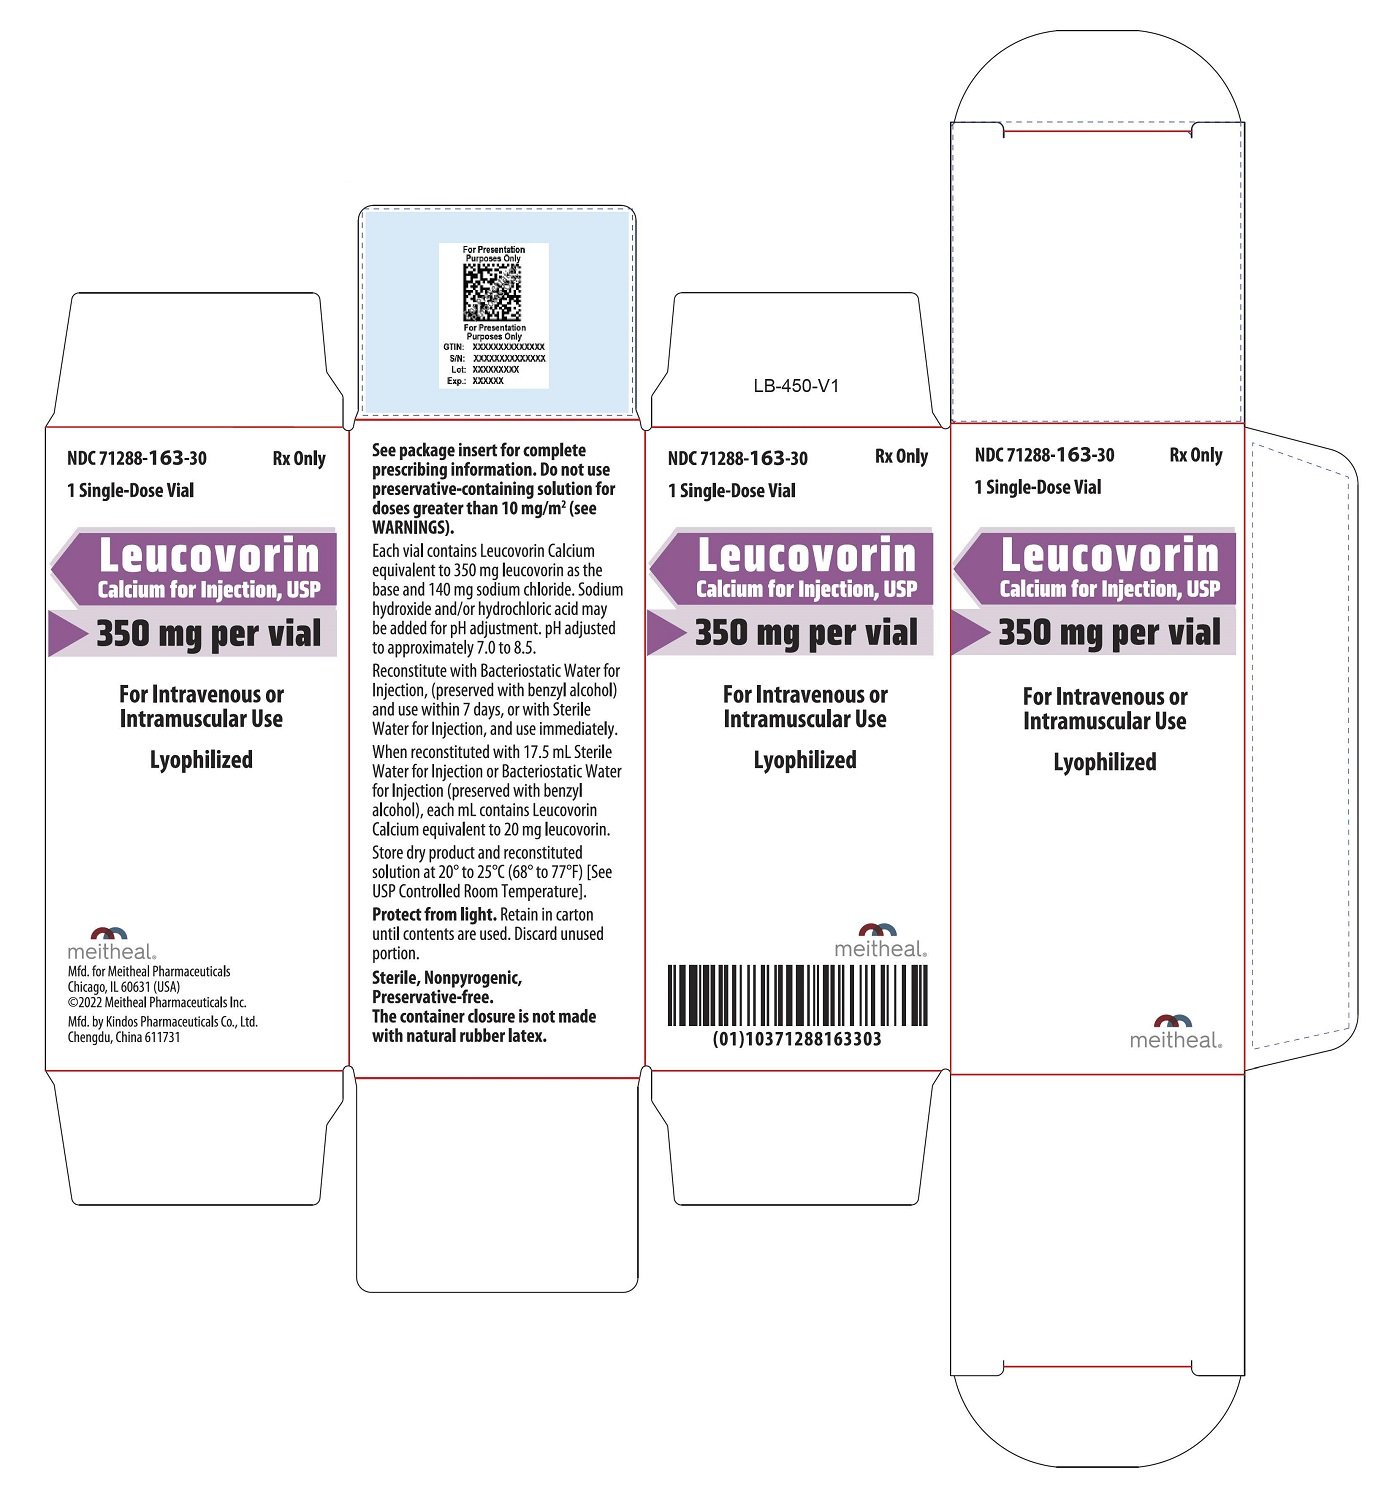 PRINCIPAL DISPLAY PANEL – Leucovorin Calcium for Injection, USP 350 mg Carton